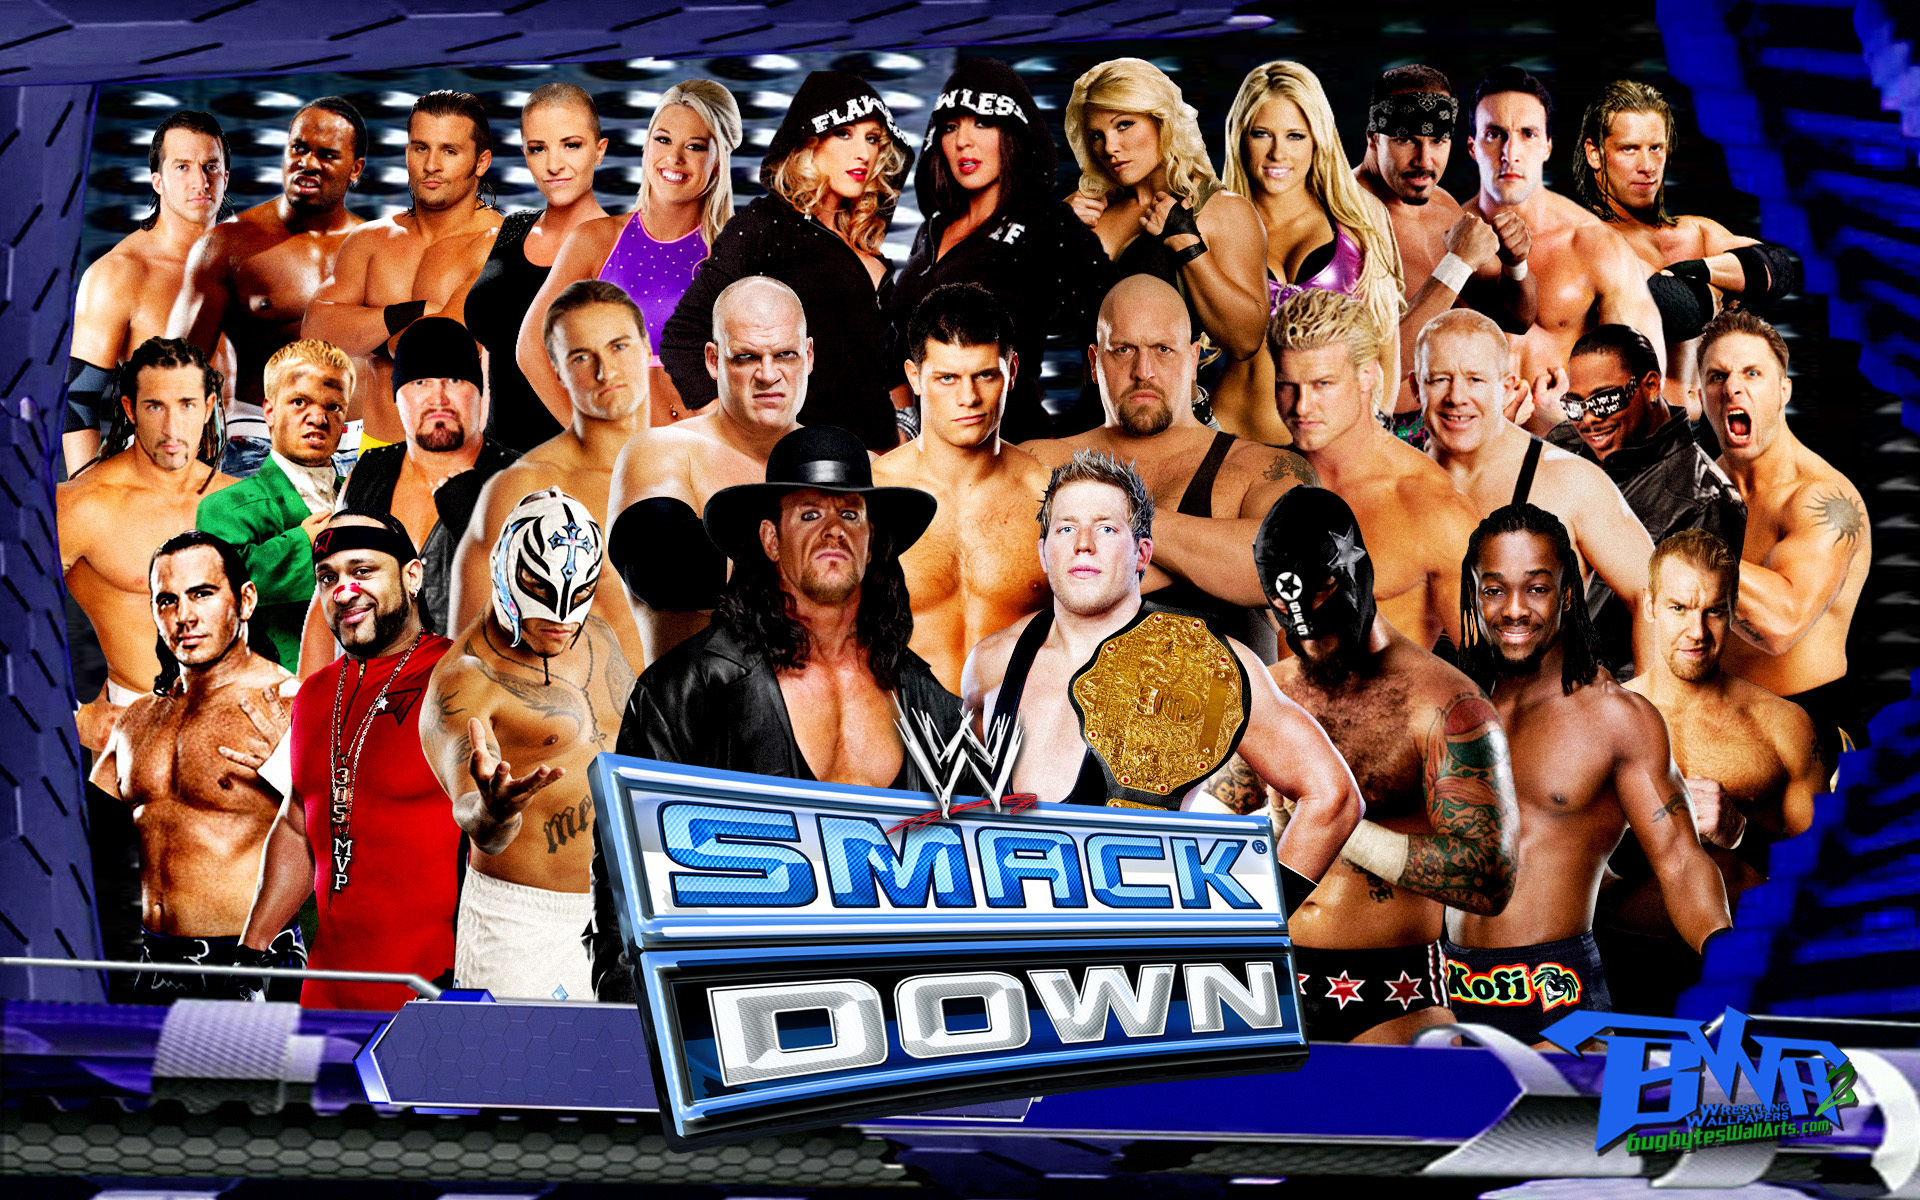 Wallpaper of WWE Smackdown Superstars